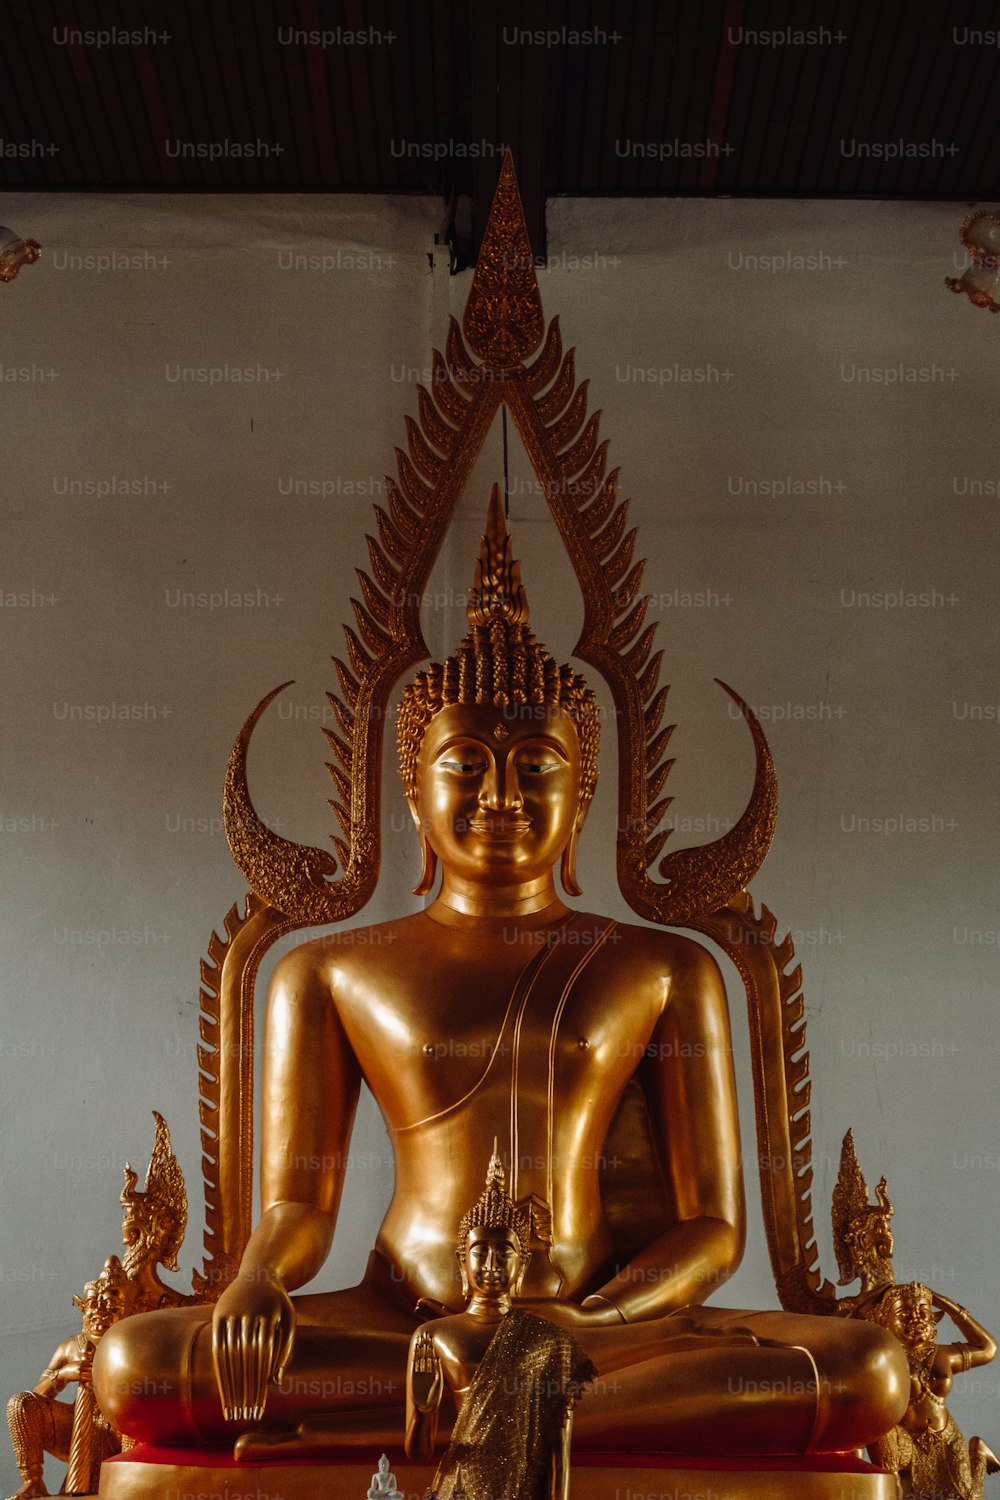 Una estatua dorada de Buda sentada encima de una mesa